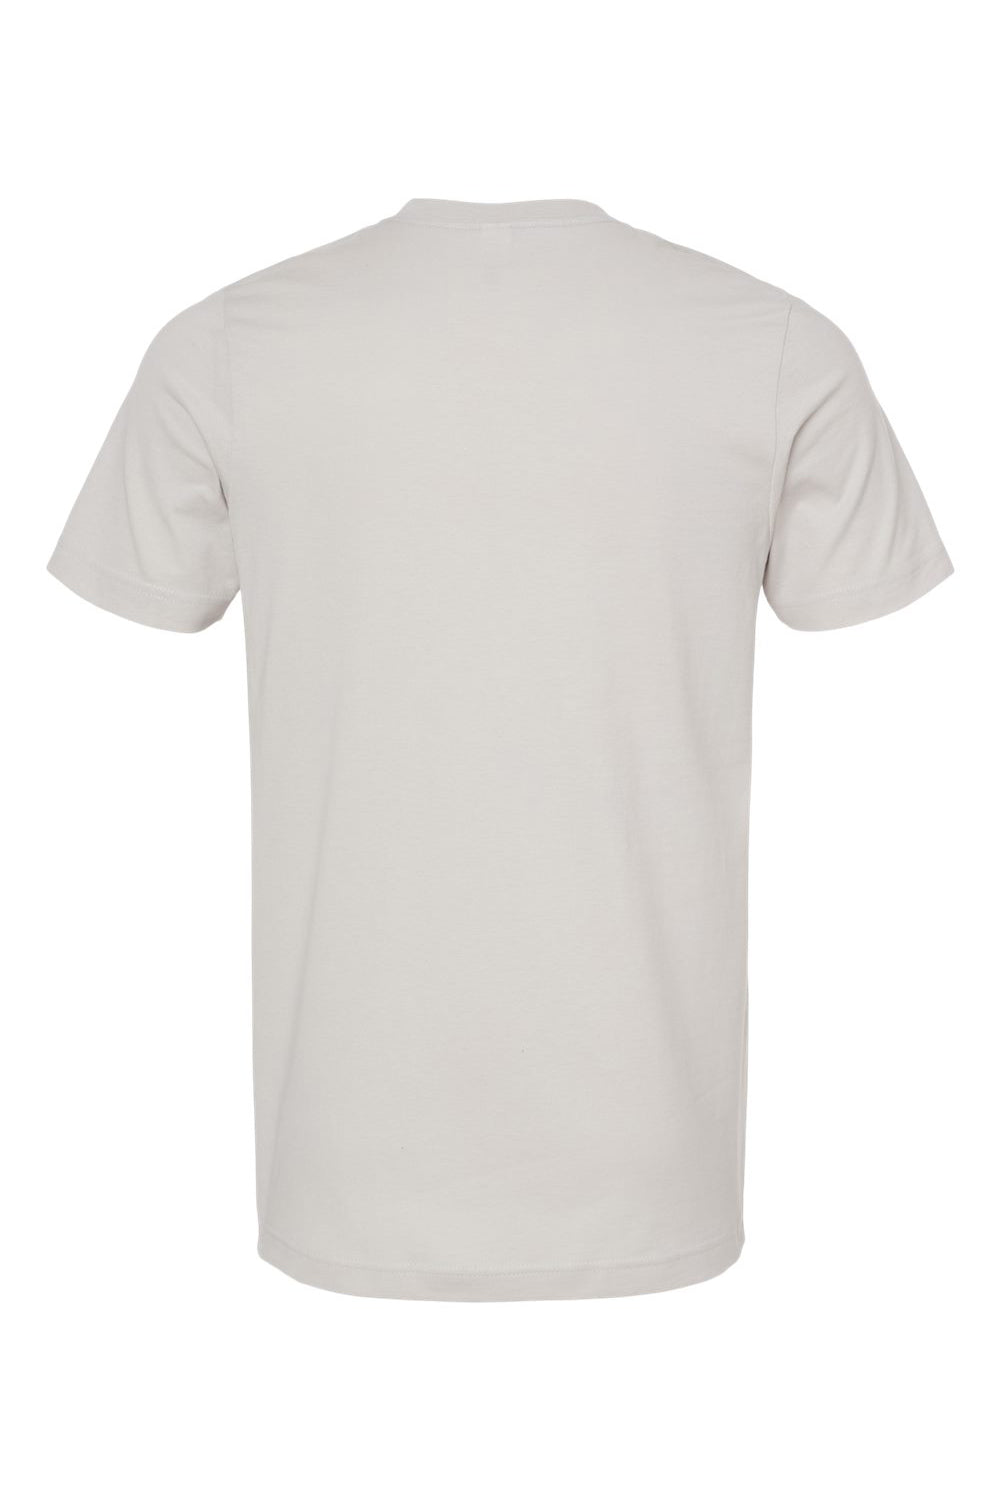 Tultex 502 Mens Premium Short Sleeve Crewneck T-Shirt Silver Grey Flat Back